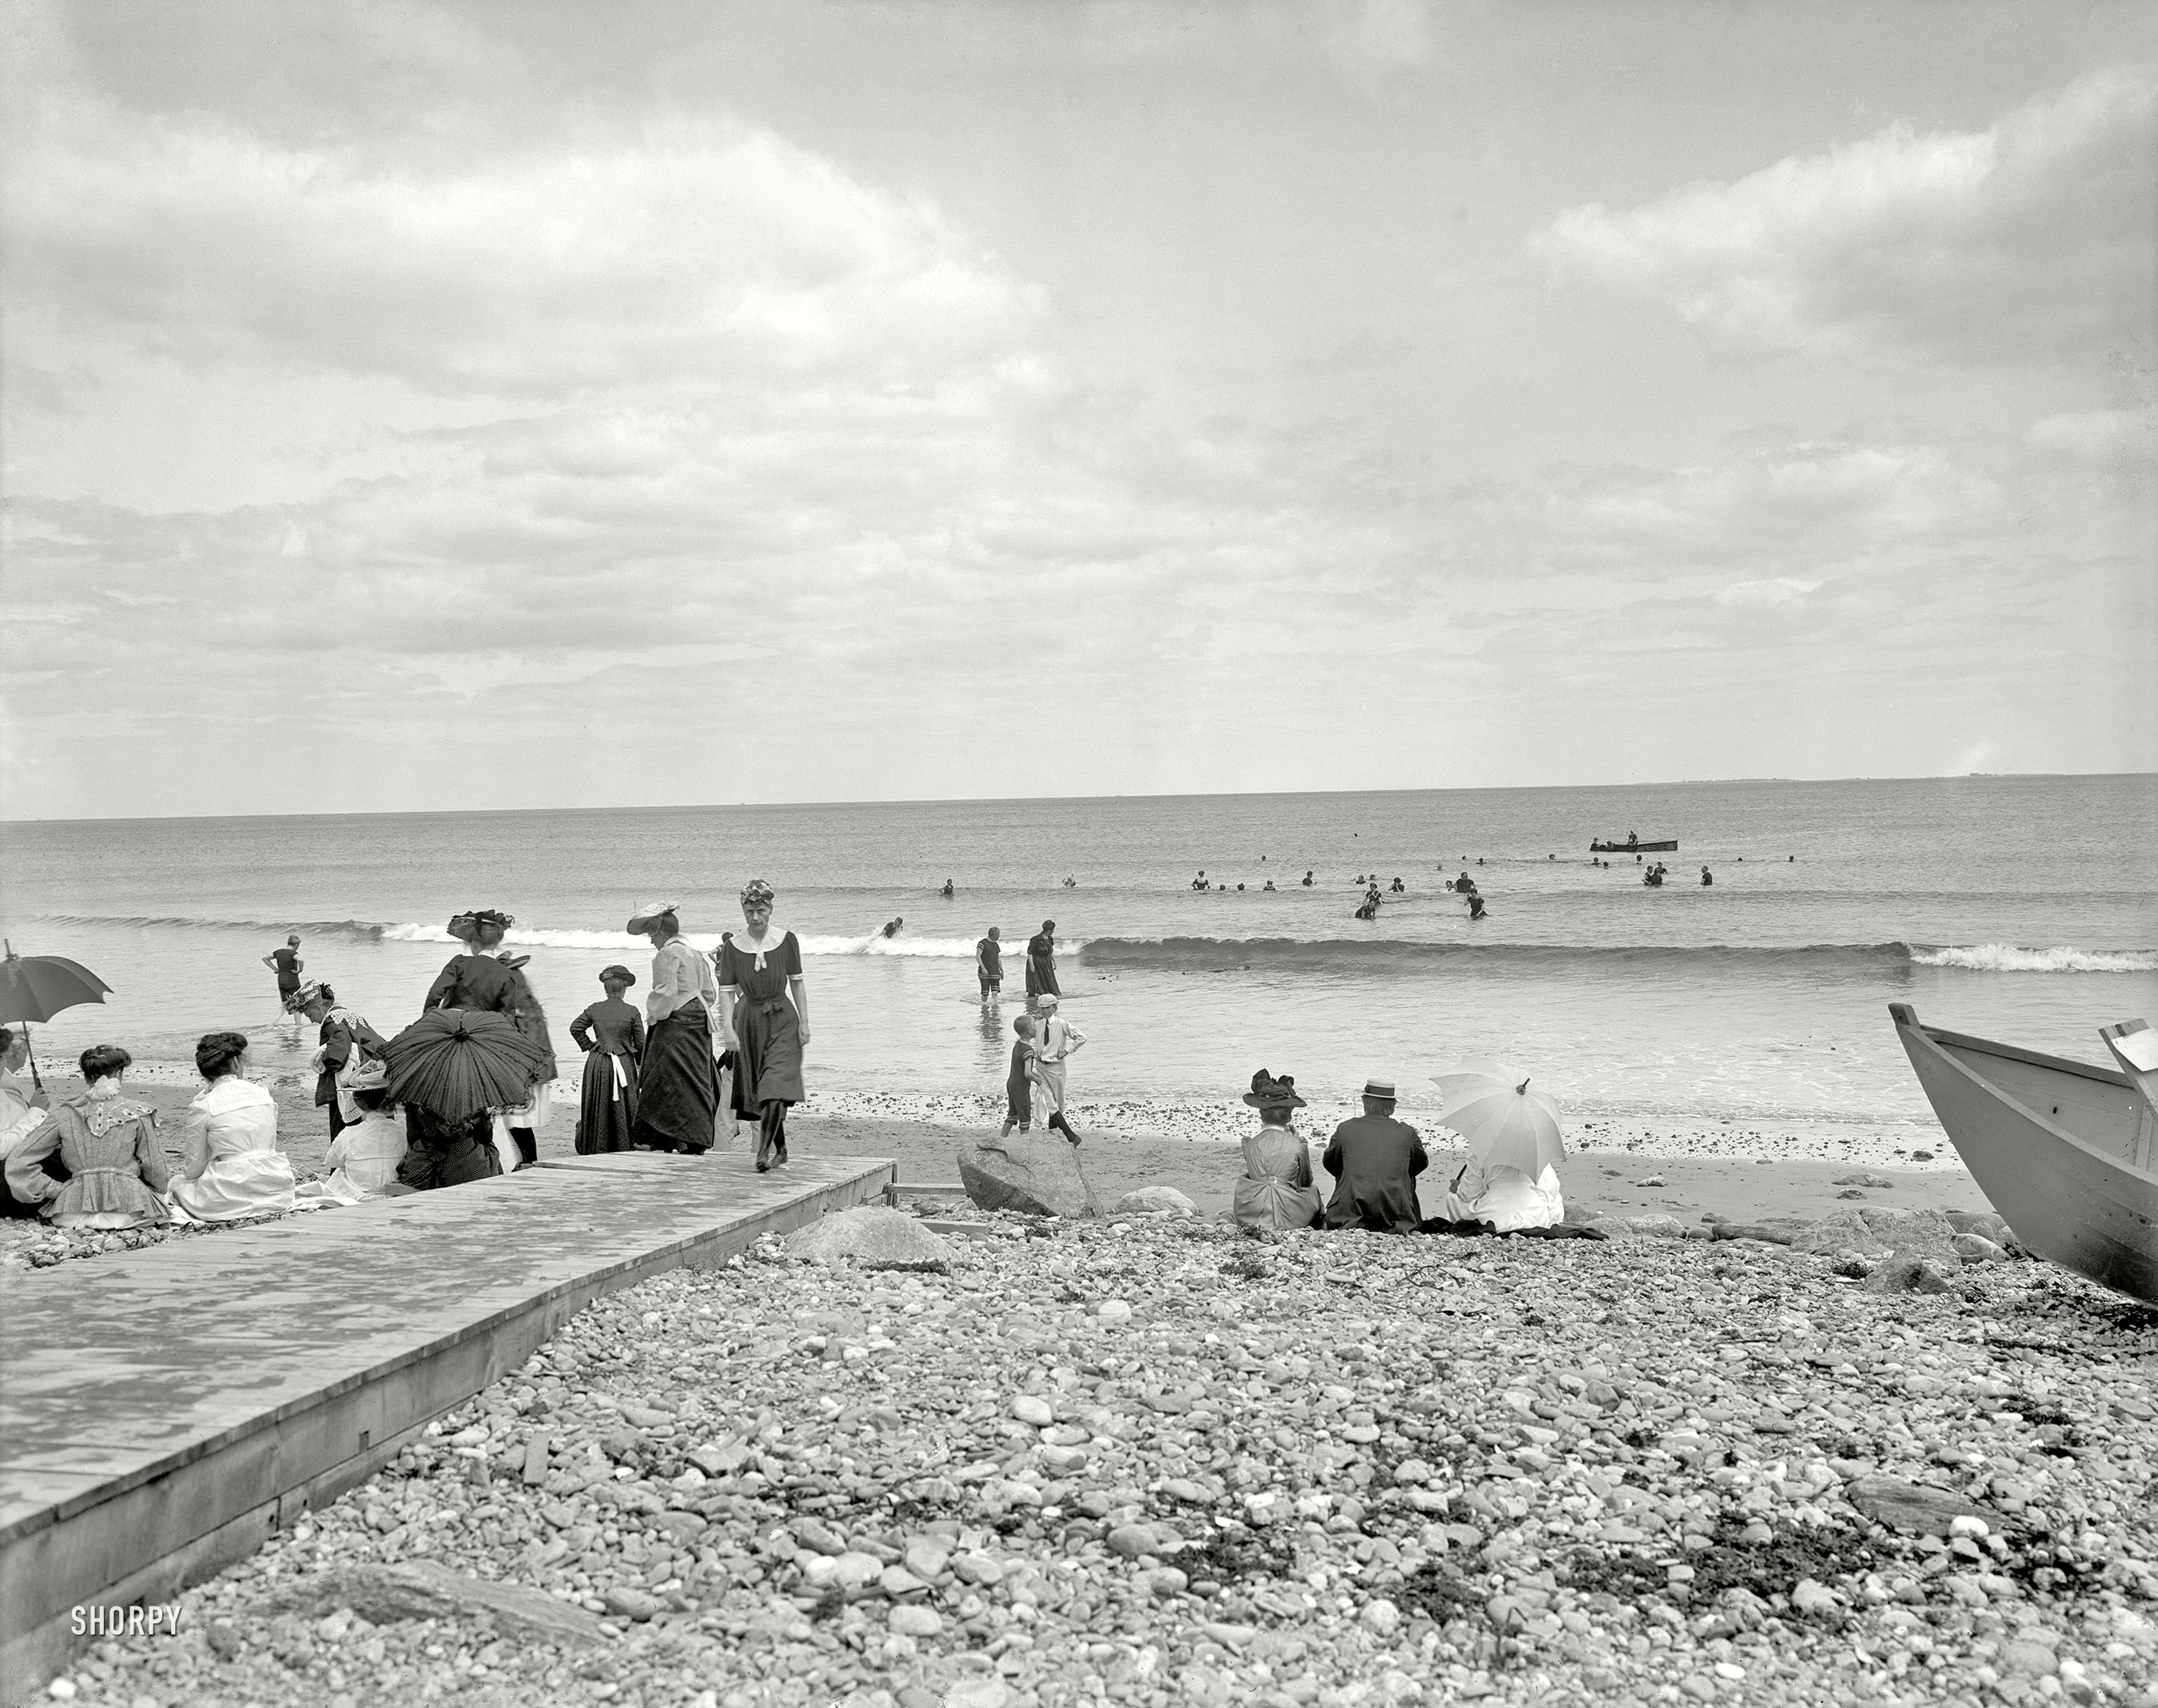 The New Hampshire coast circa 1905. "Rye Beach bathers." 8x10 inch dry plate glass negative, Detroit Publishing Company. View full size.